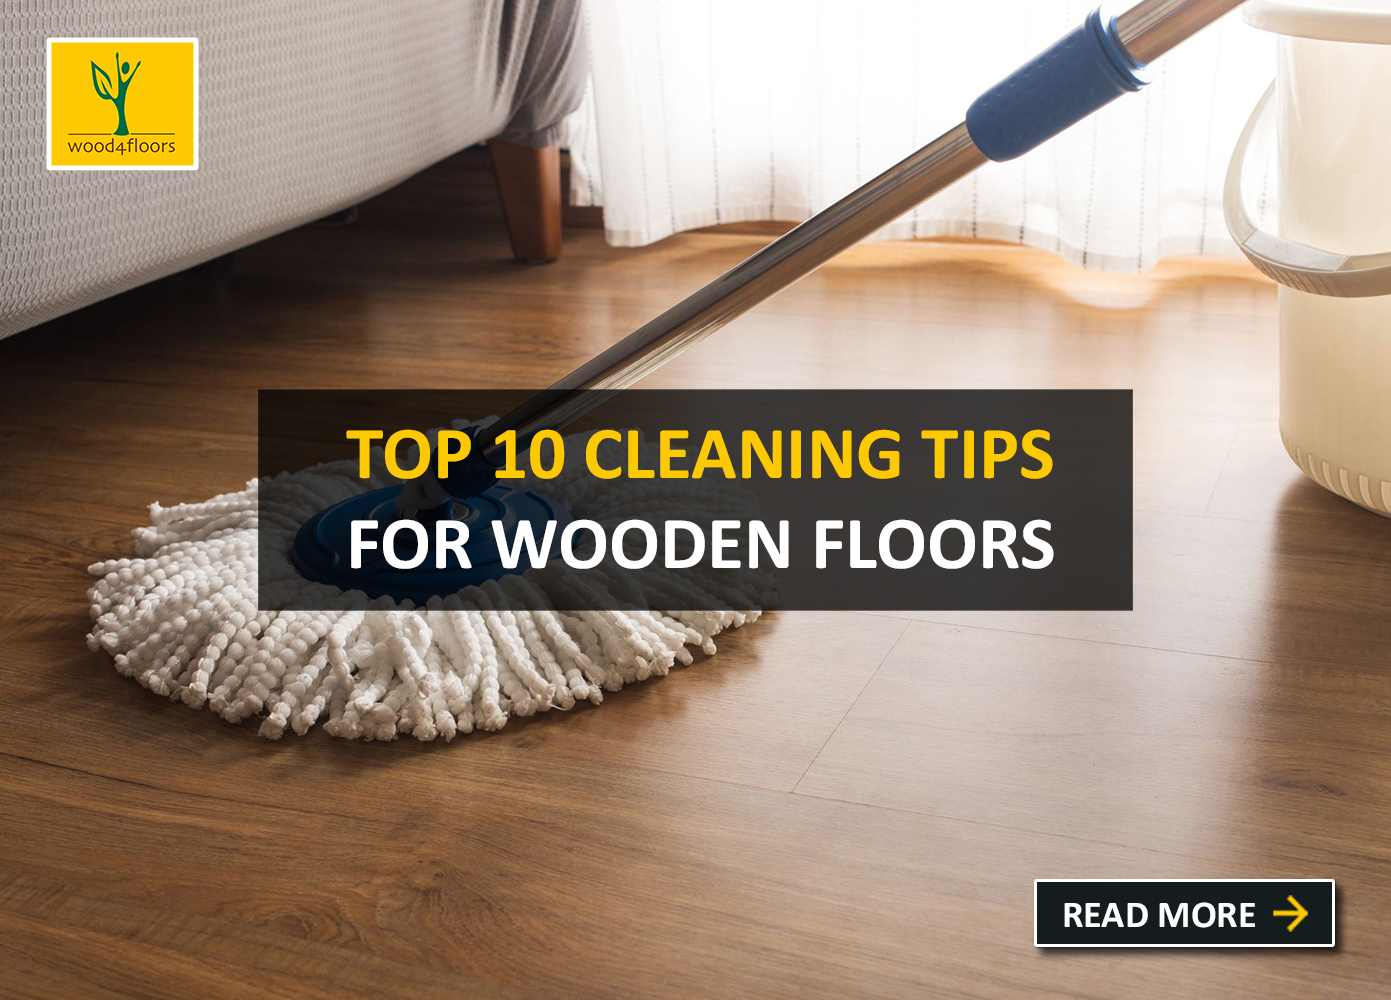 https://www.wood4floors.co.uk/wp-content/uploads/2021/11/Blog-Top-10-cleaning-tips-for-wooden-floors.jpg